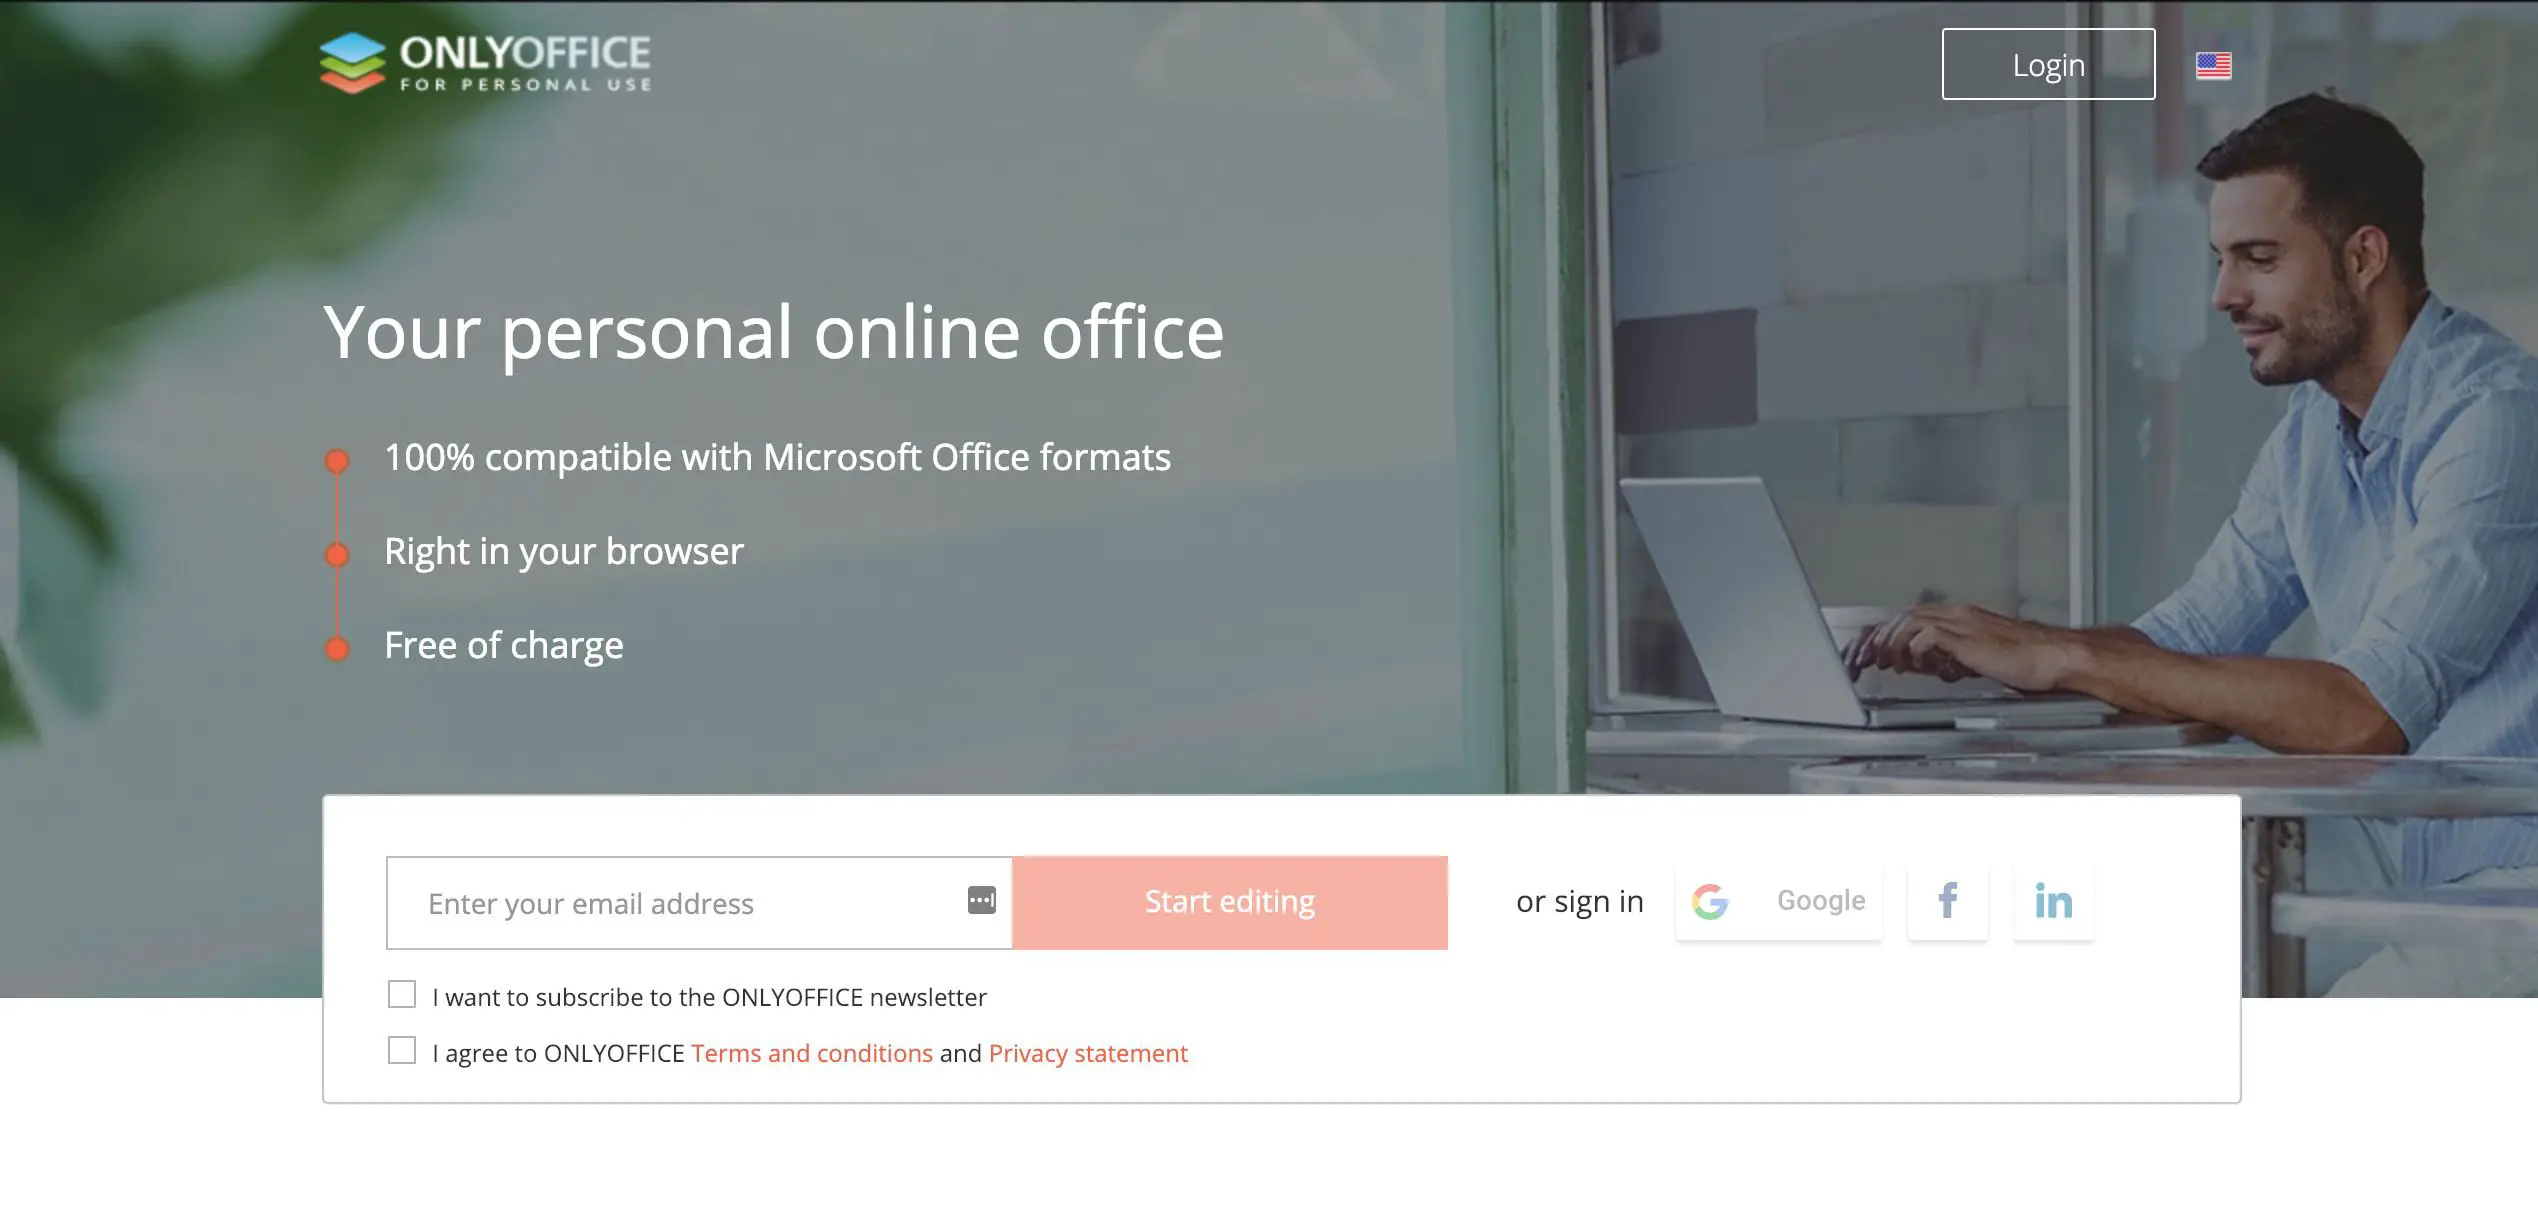 Site da alternativa gratuita ao Microsoft Office, ONLYOFFICE.